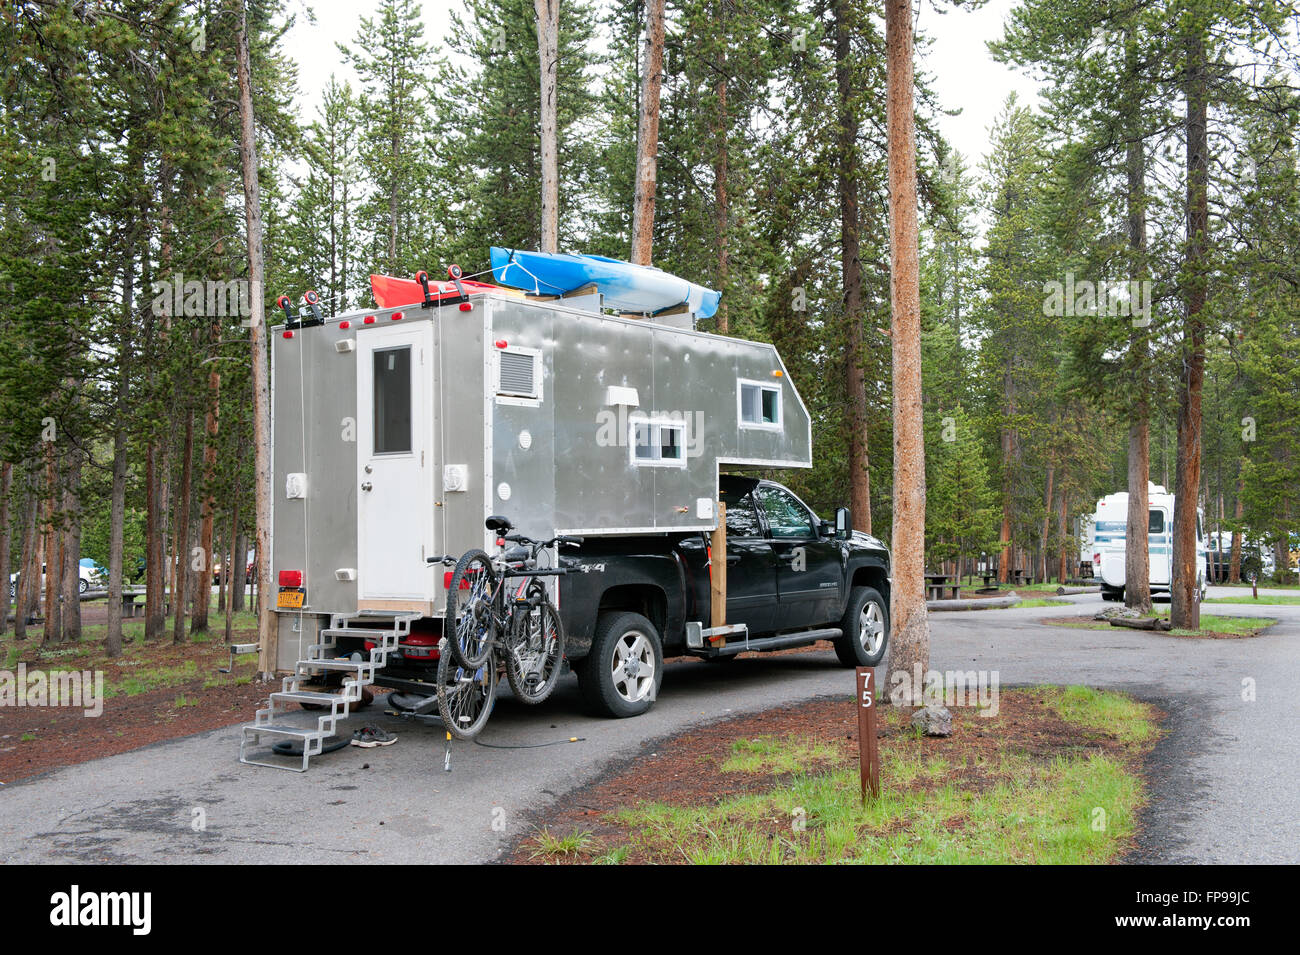 YELLOWSTONE NATIONAL PARK, USA - JUNE 6, 2015: Self-made camper at a Yellowstone National Park campground. Stock Photo